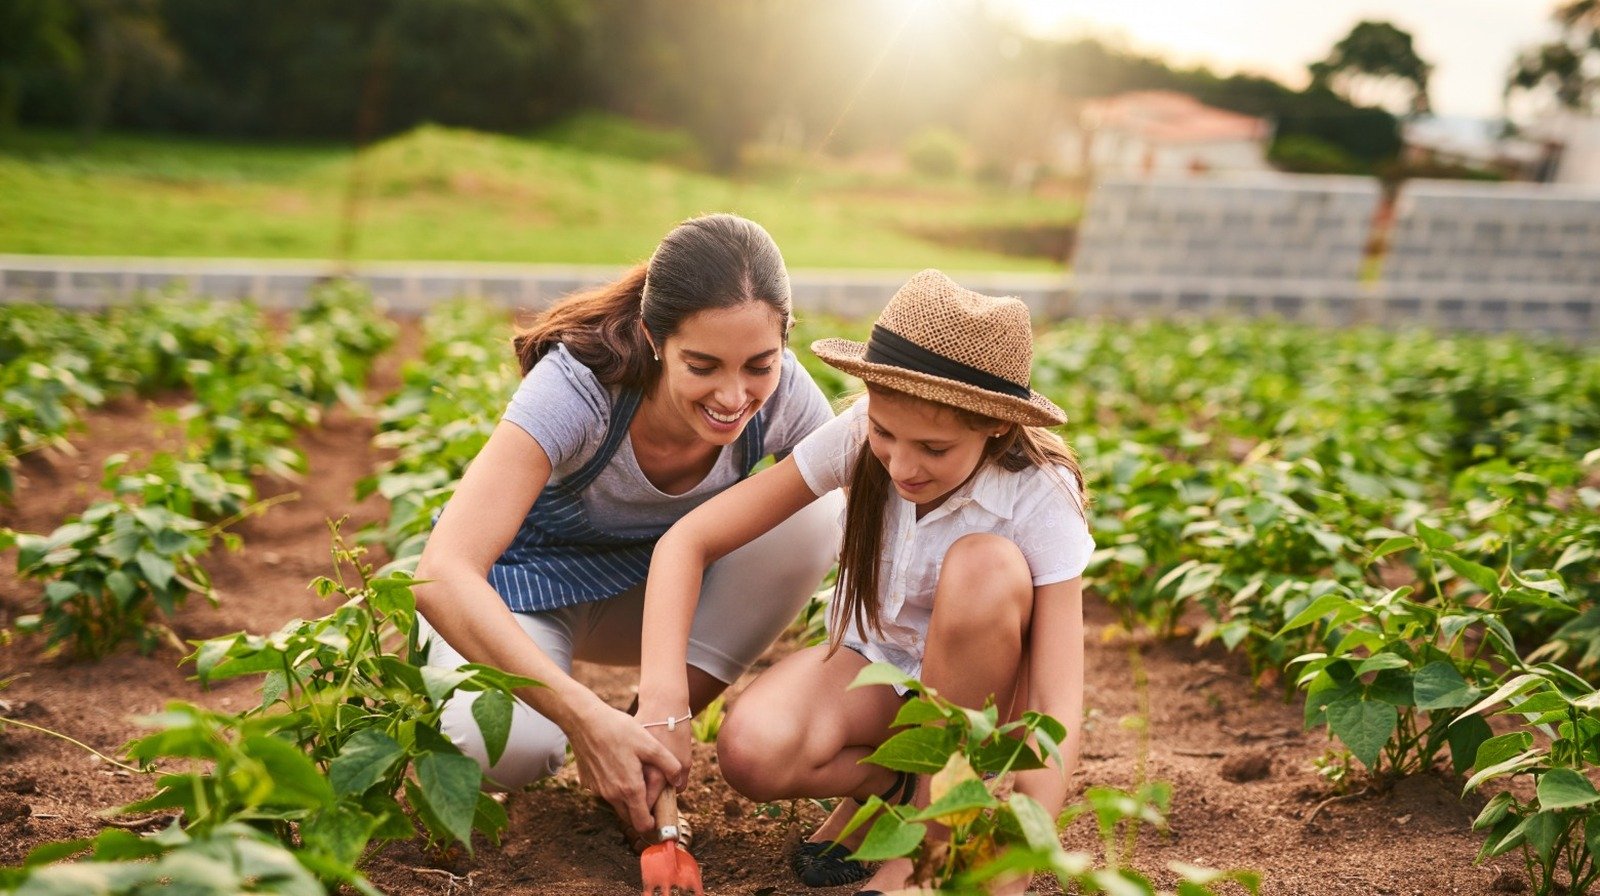 Should You Consider GMOs For Your Home Garden?